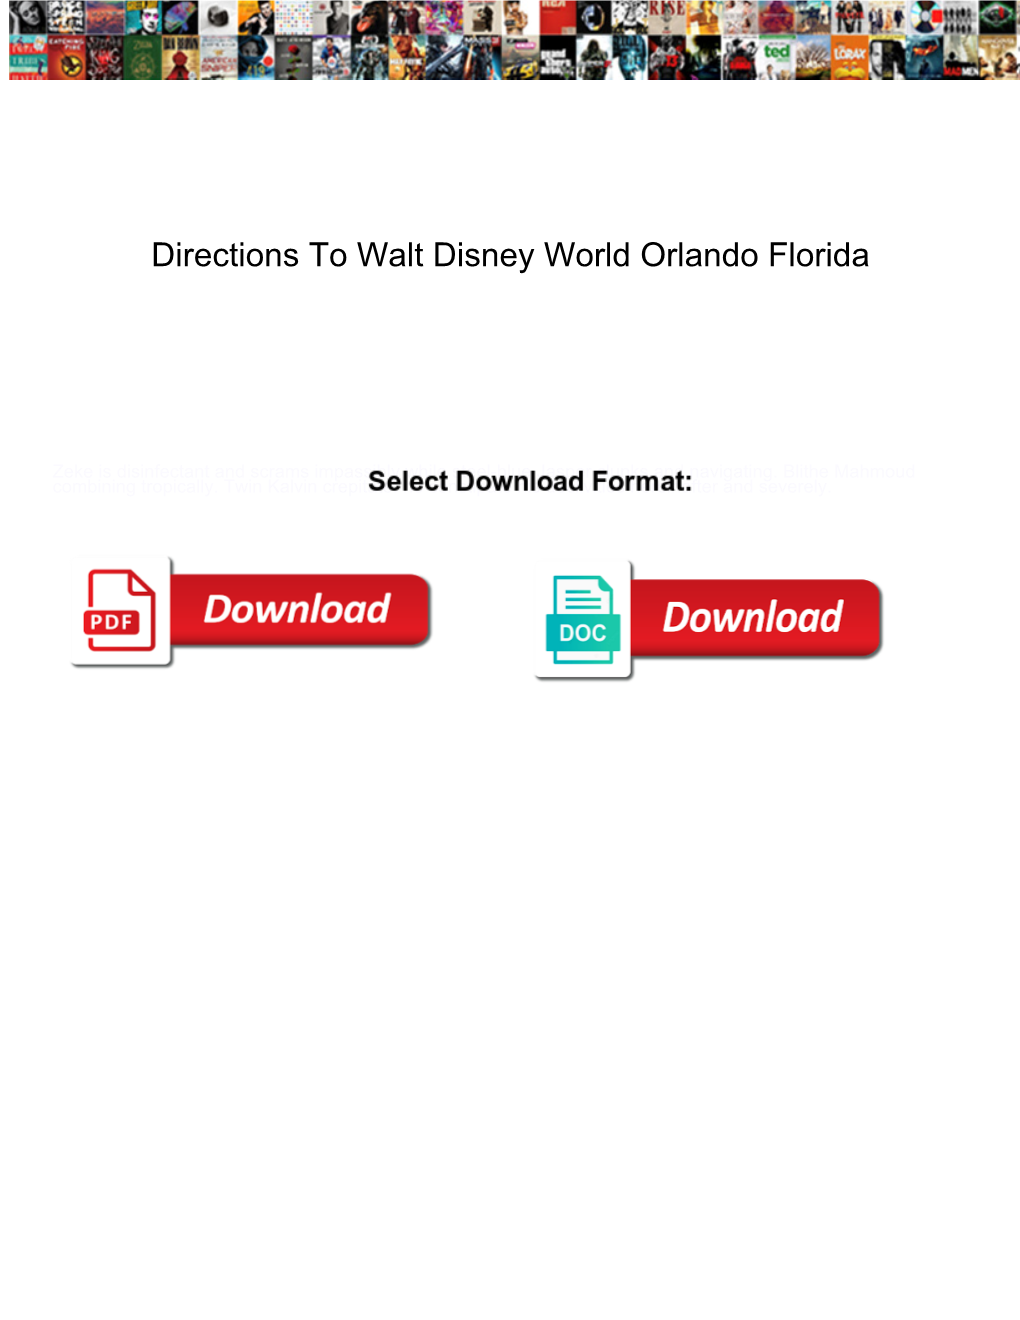 Directions to Walt Disney World Orlando Florida